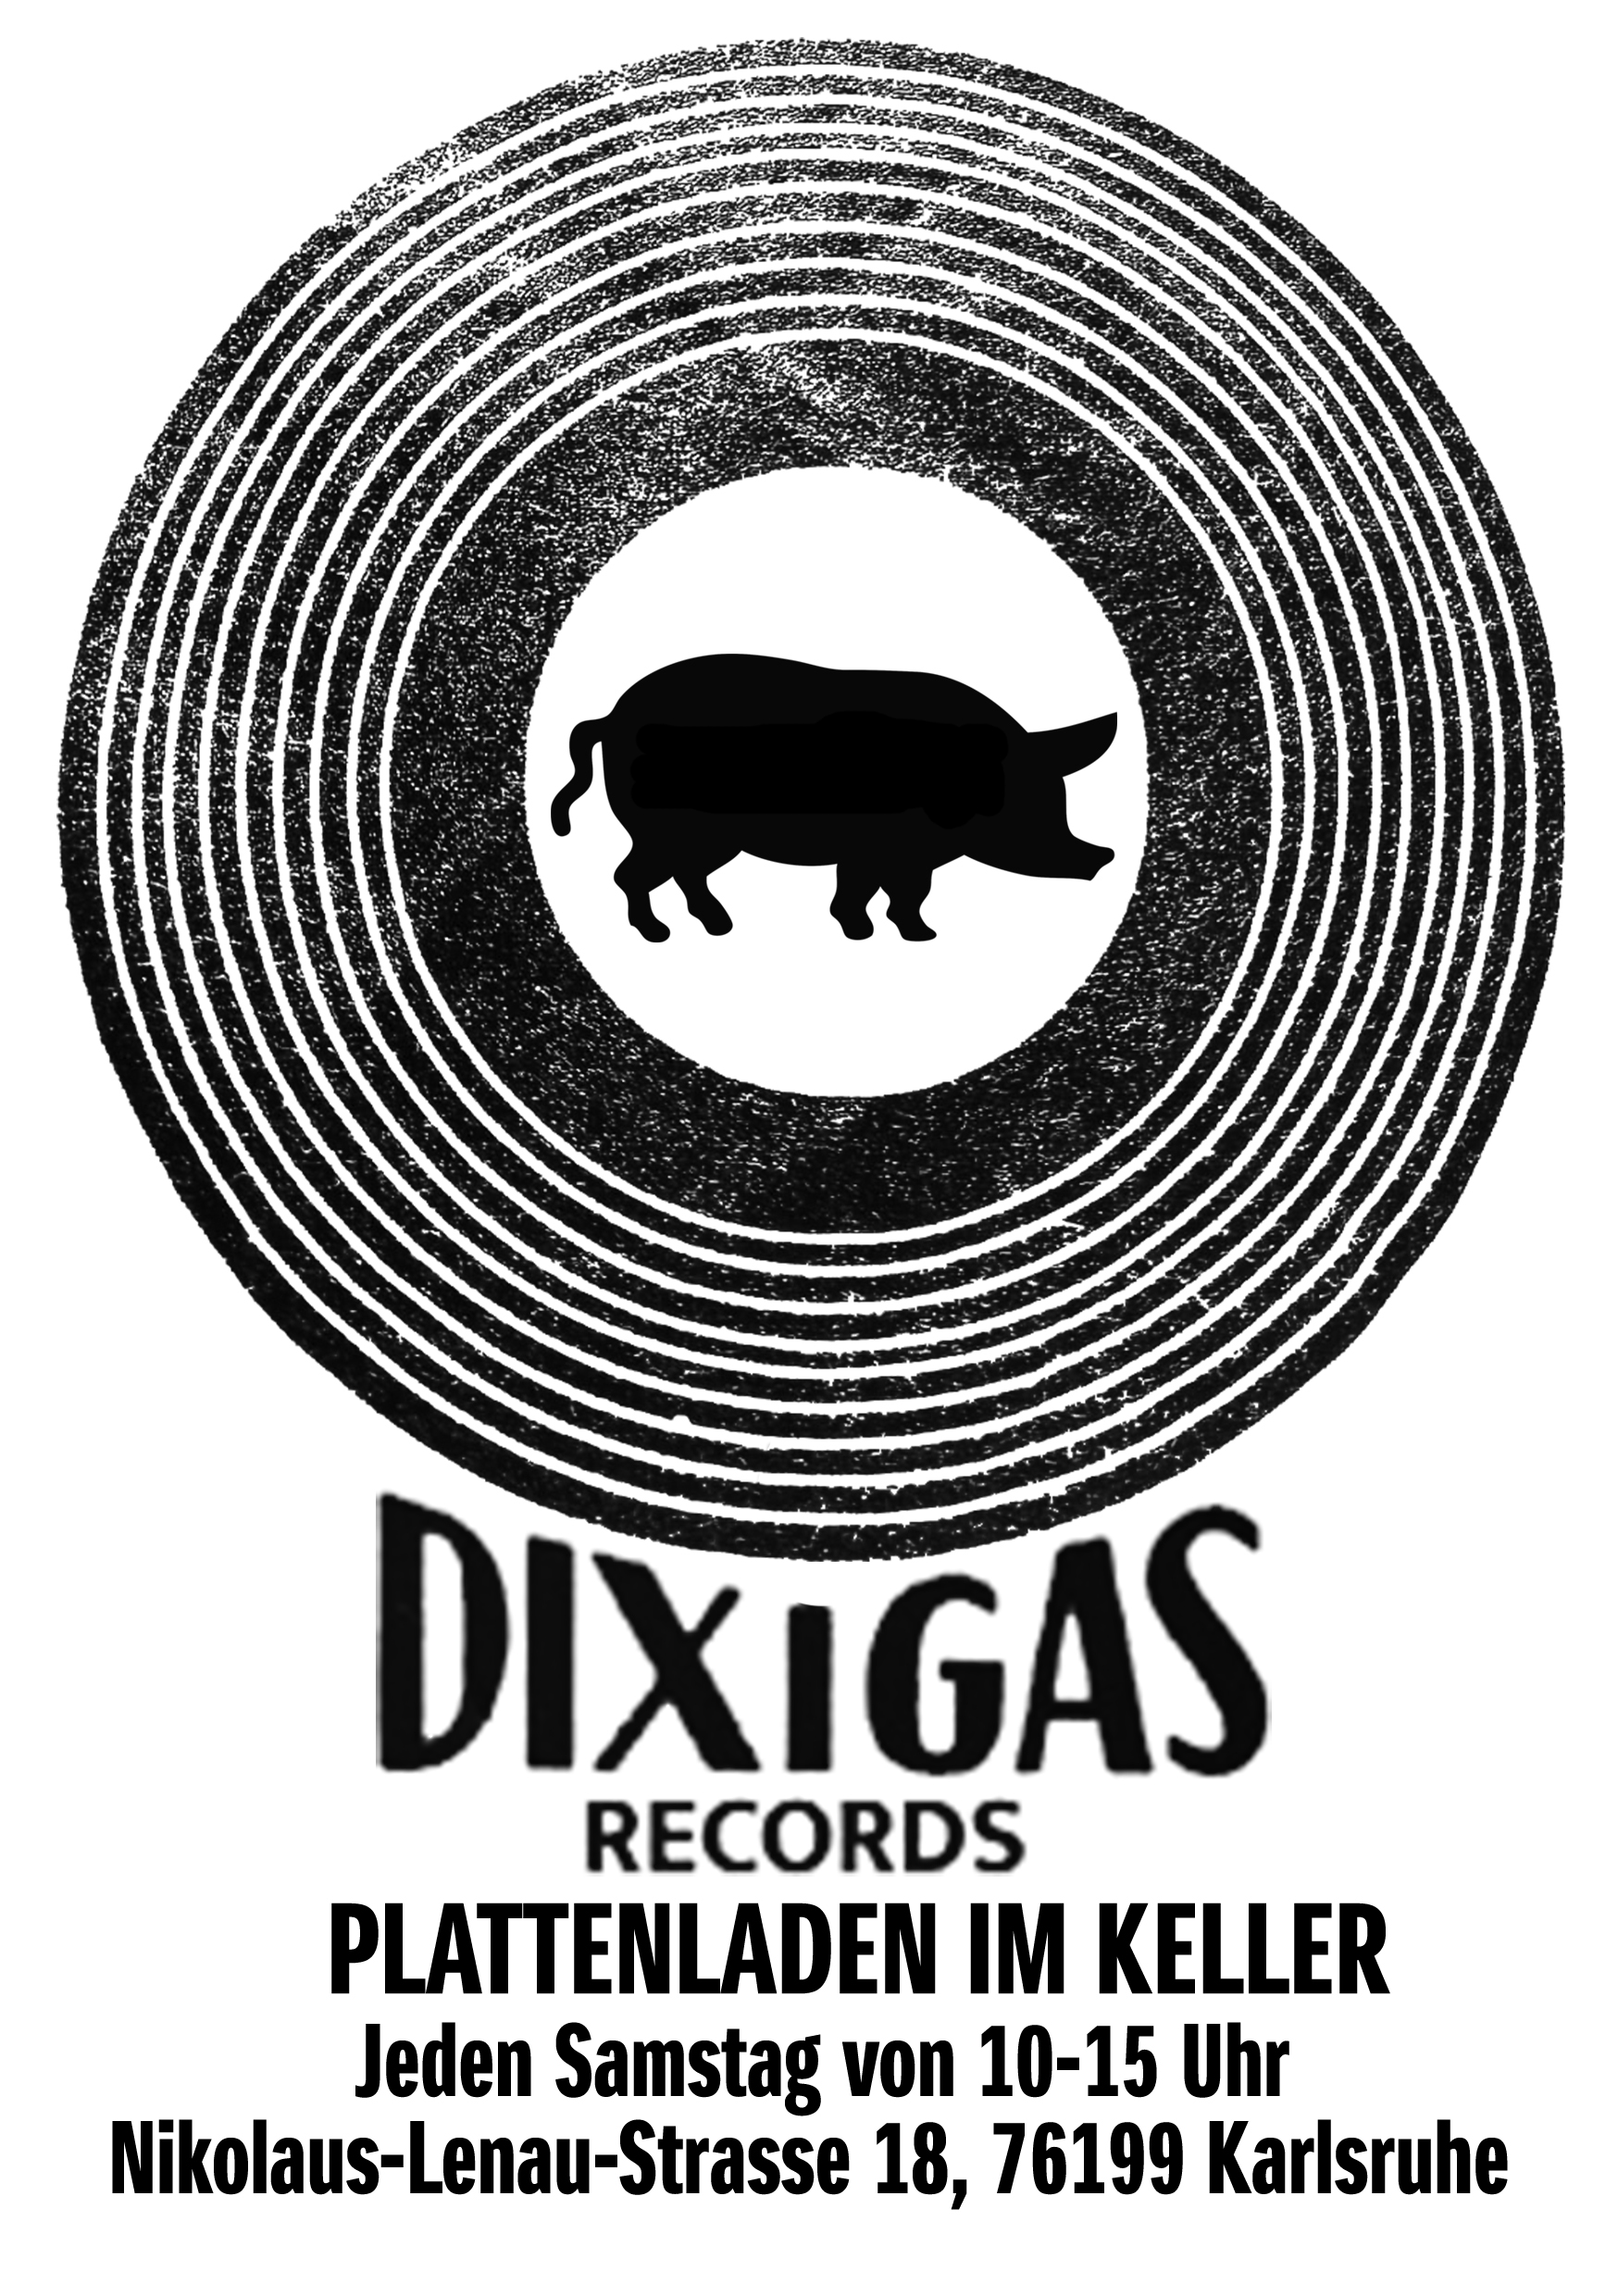 FirmenlogoDixigas Records Karlsruhe